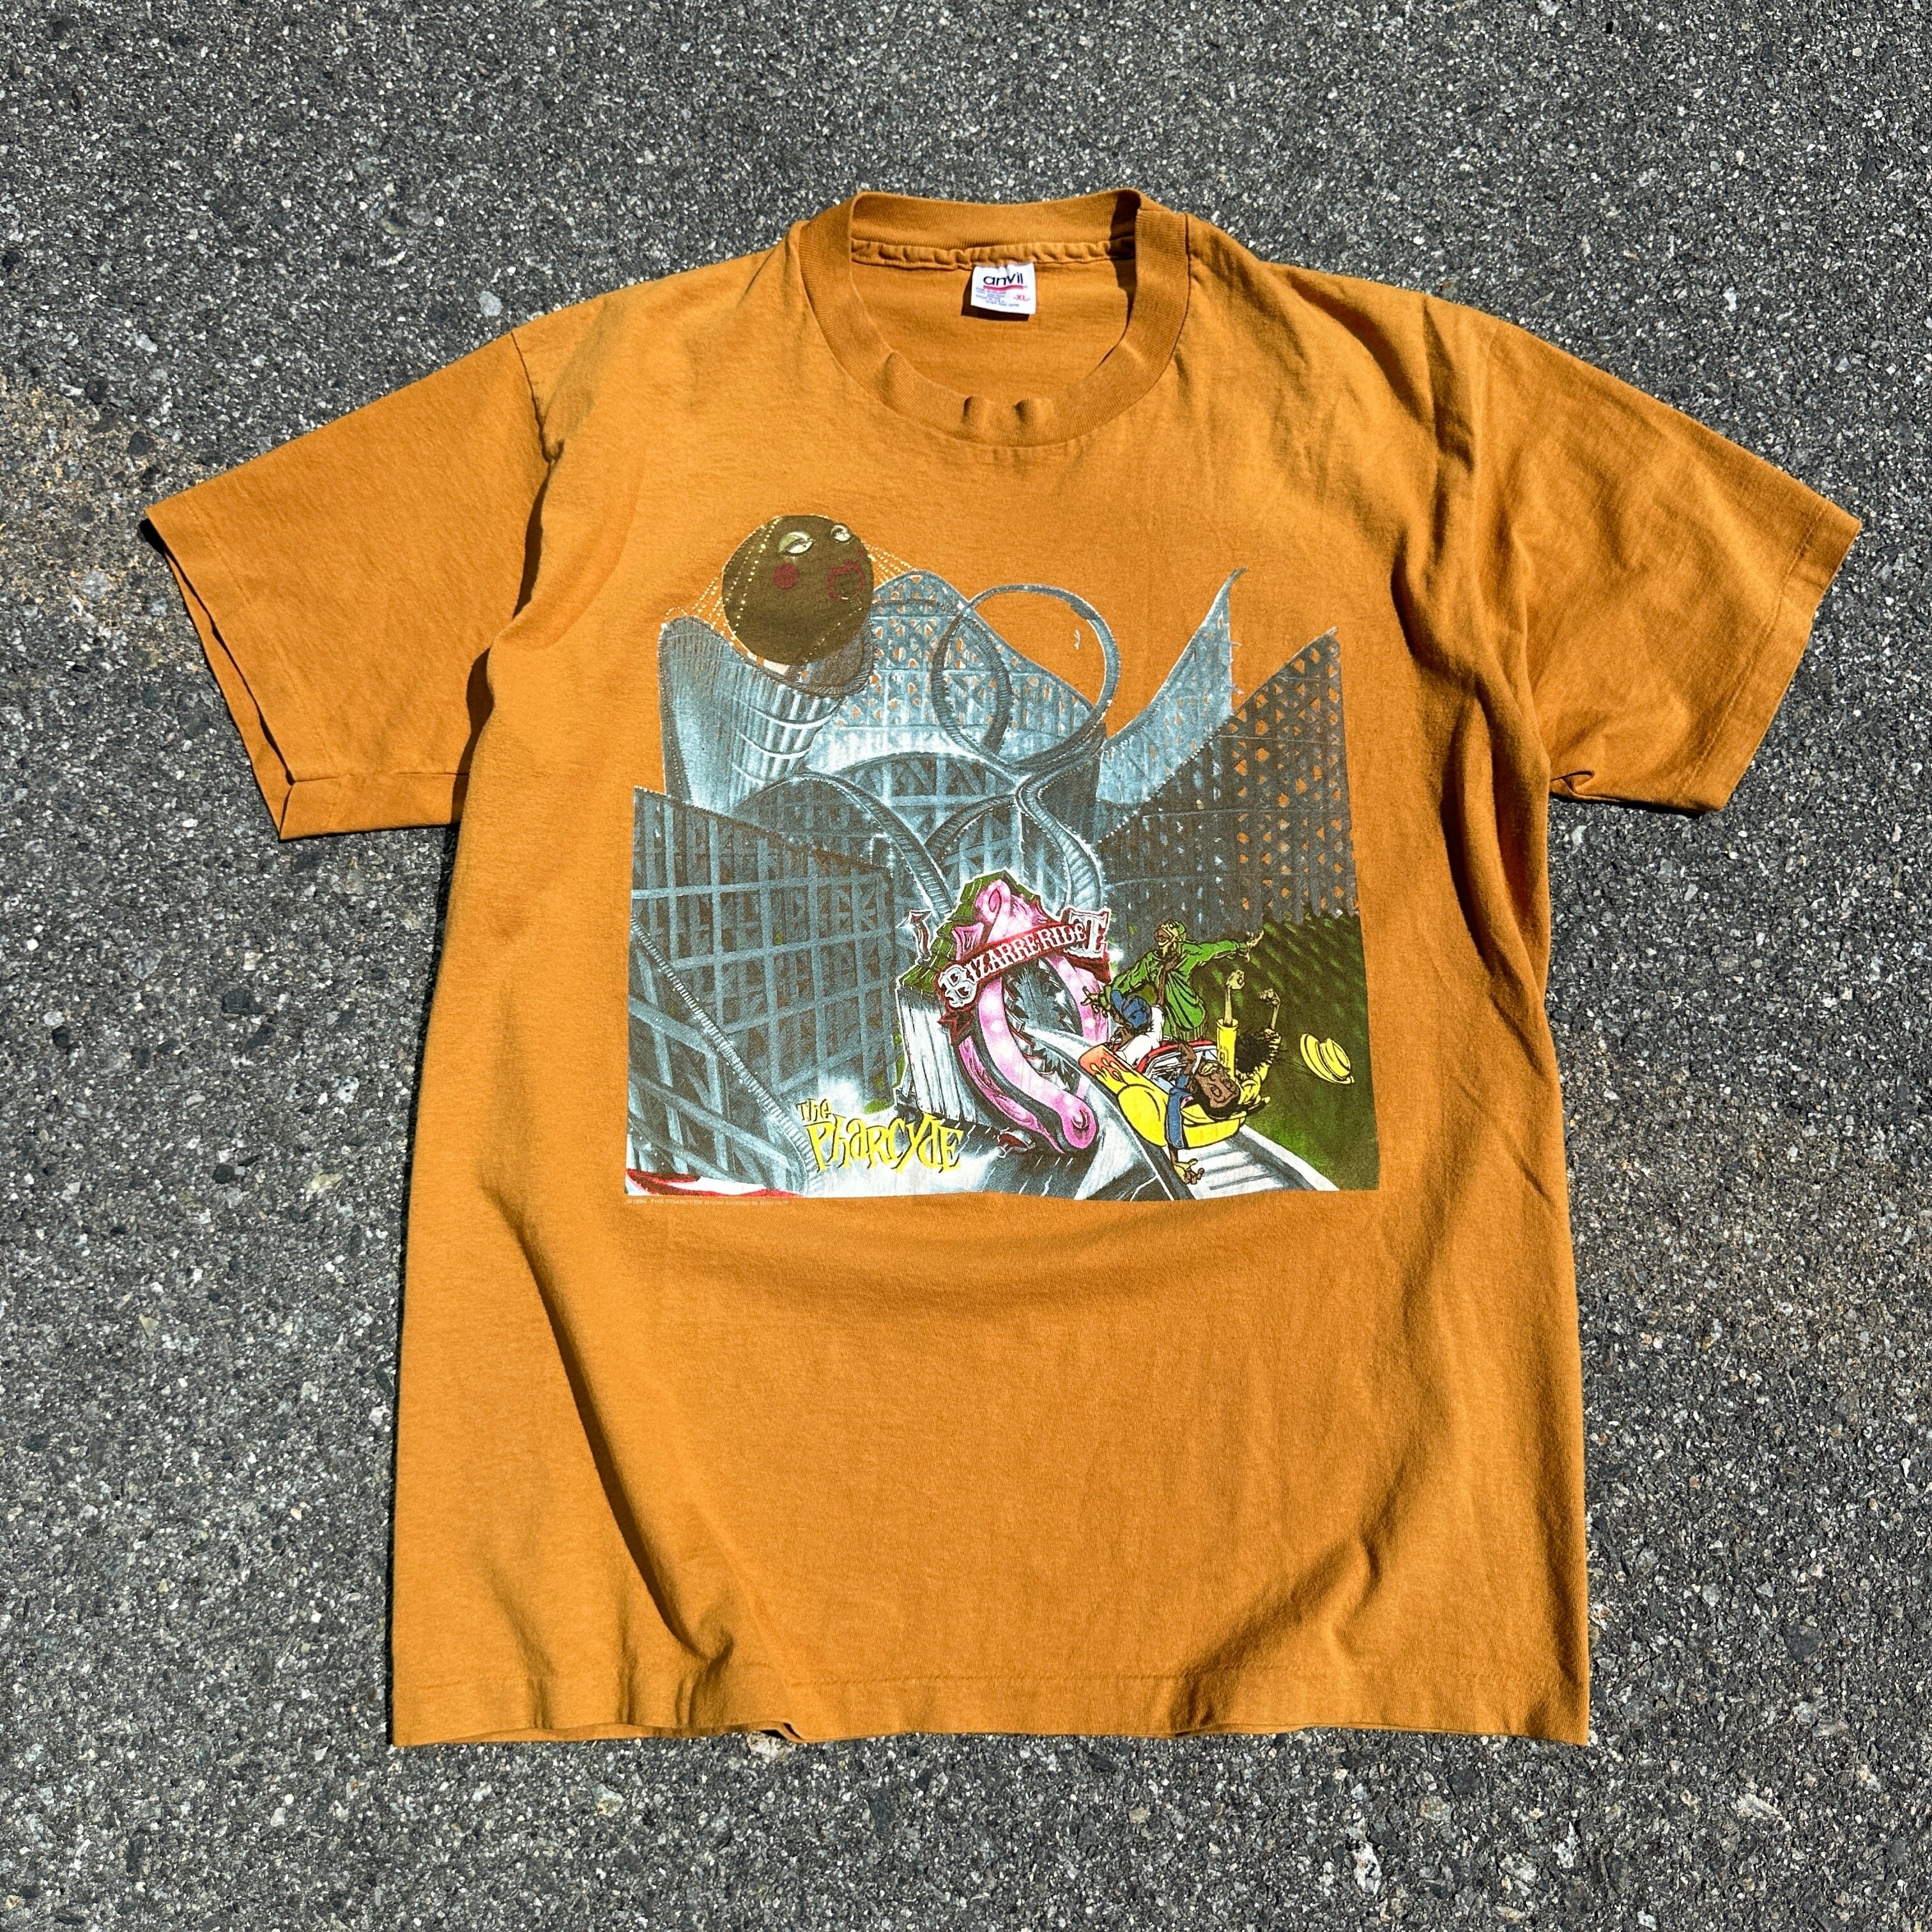 Vintage Pharcycde Rap T-shirt Bizarre Ride ll 1994 shorts FAIF.CA 